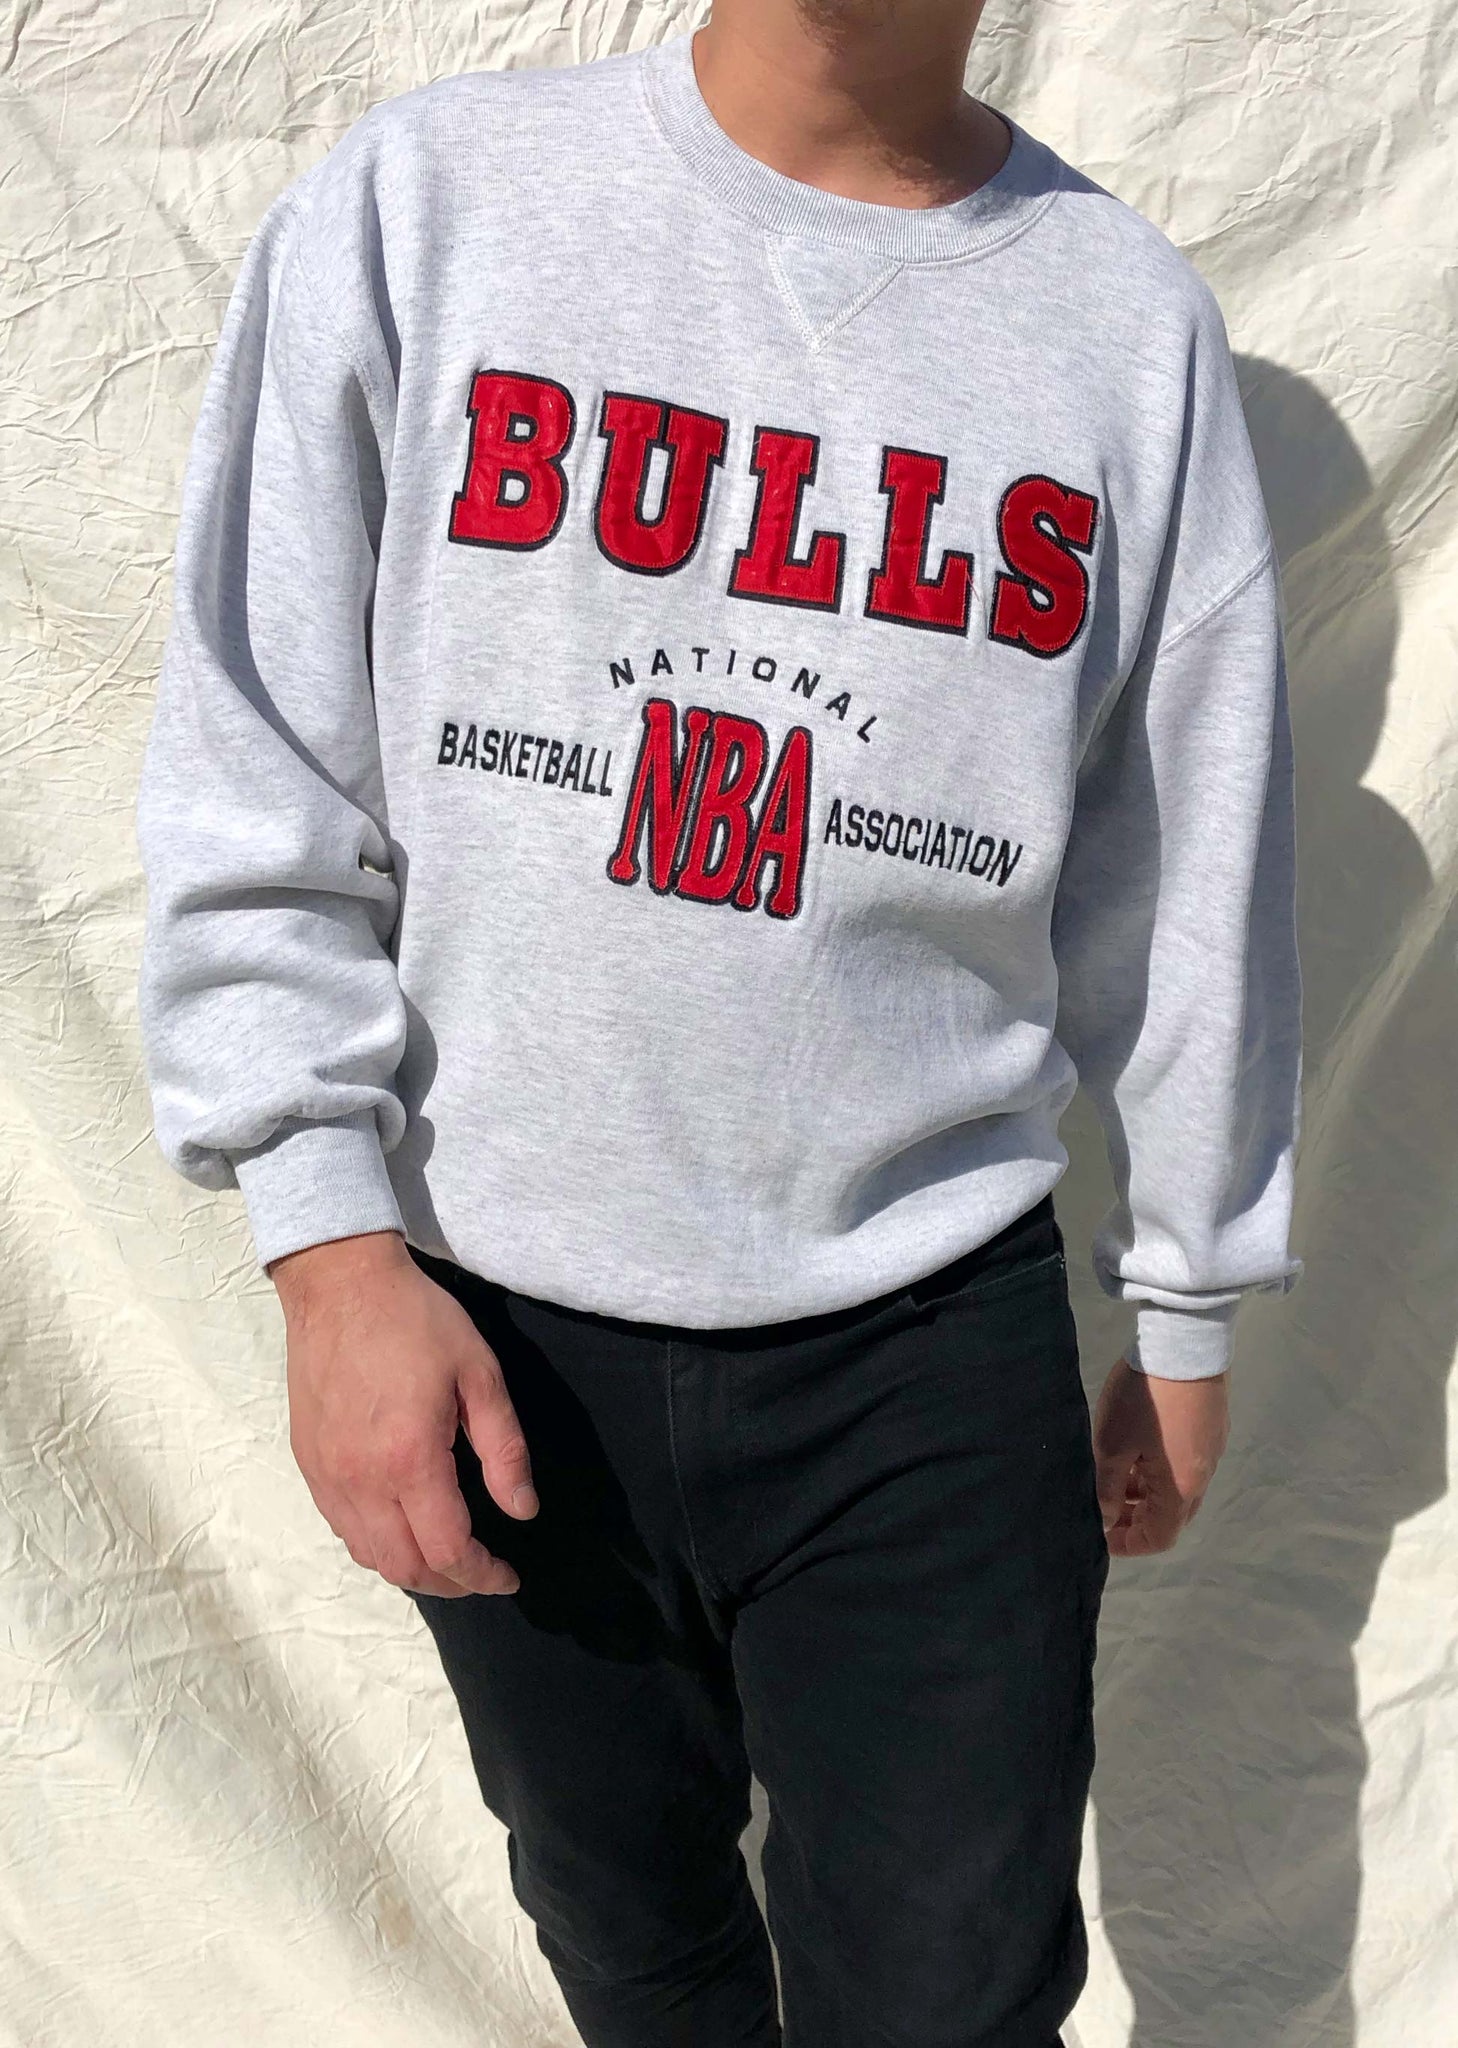 Chicago Bulls Champions Vintage Style T-Shirt, 2x